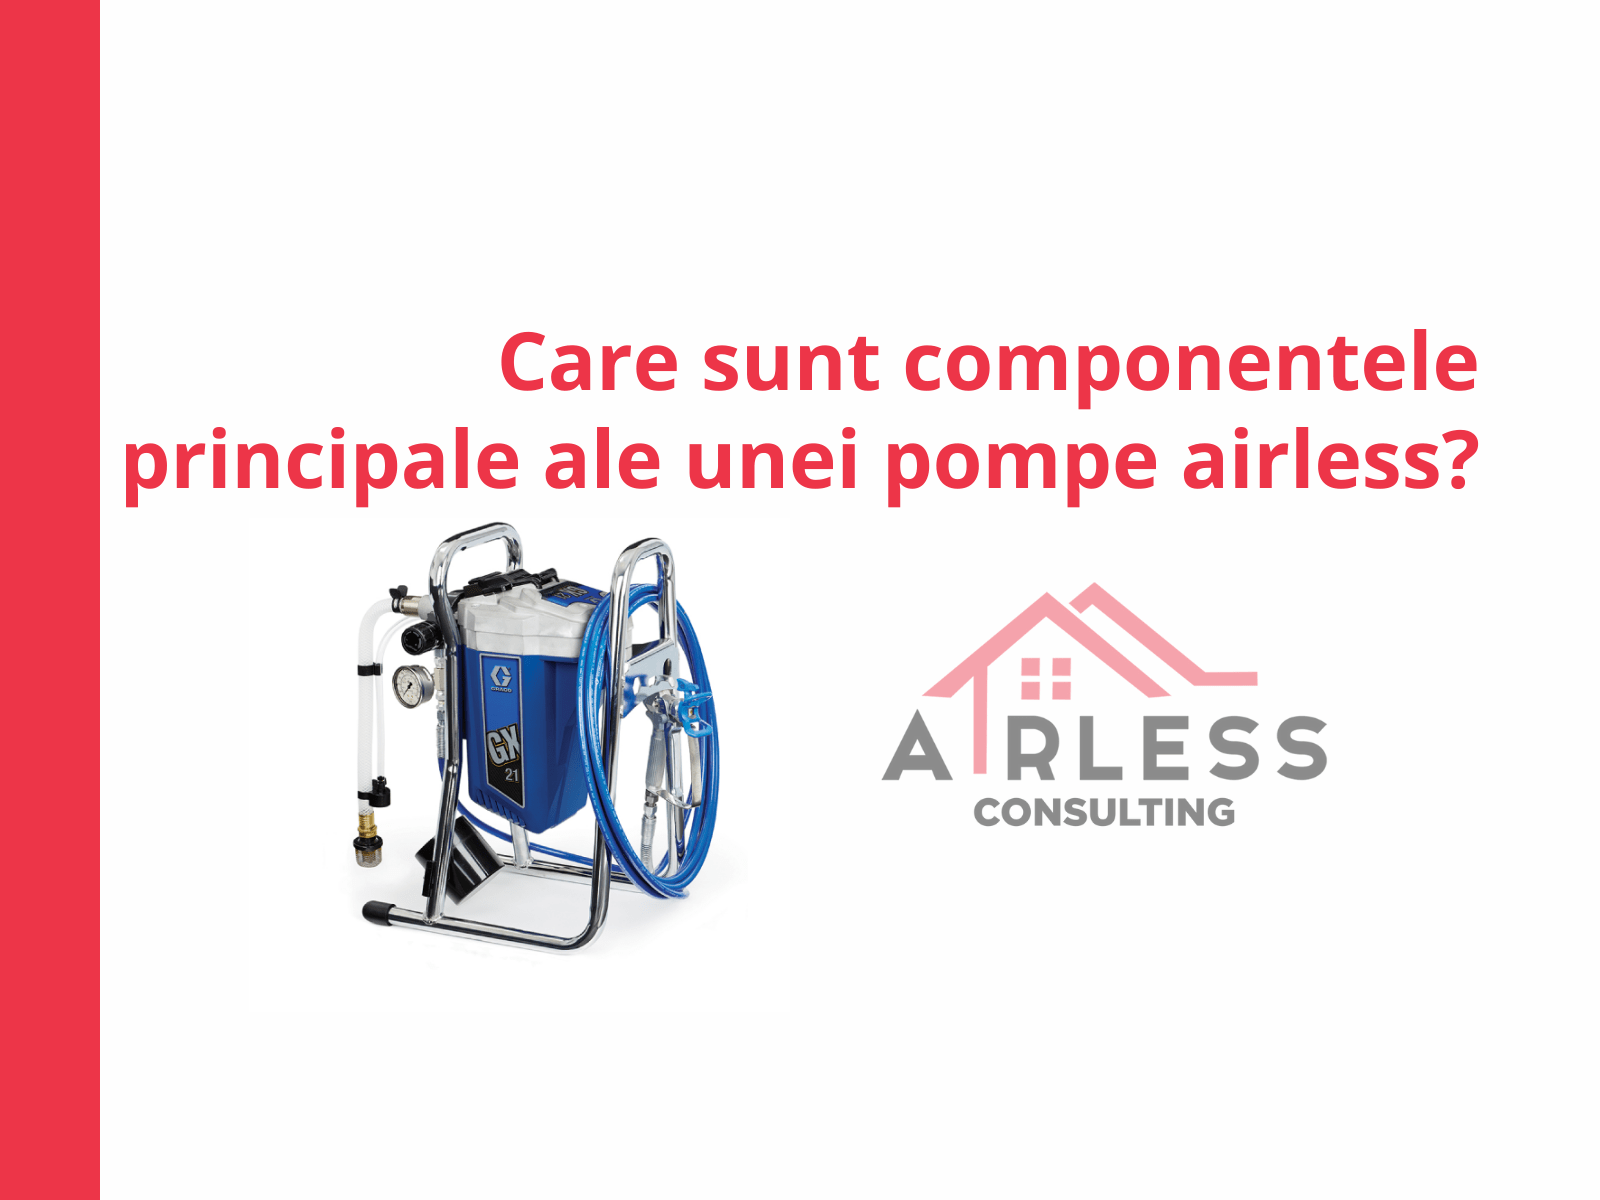 Care sunt componentele principale ale unei pompe airless?